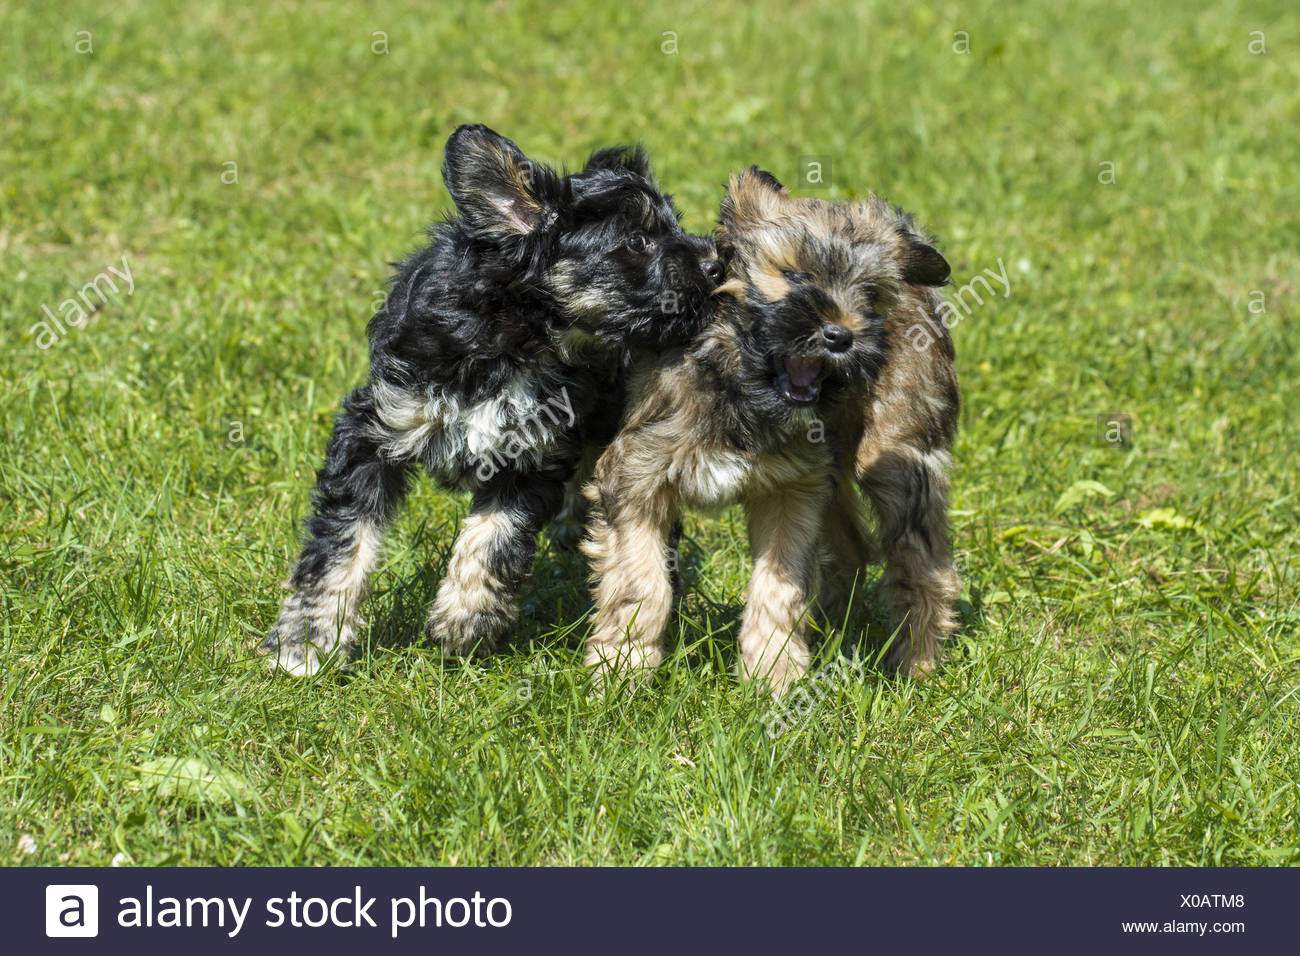 tibetan terrier rescue dogs